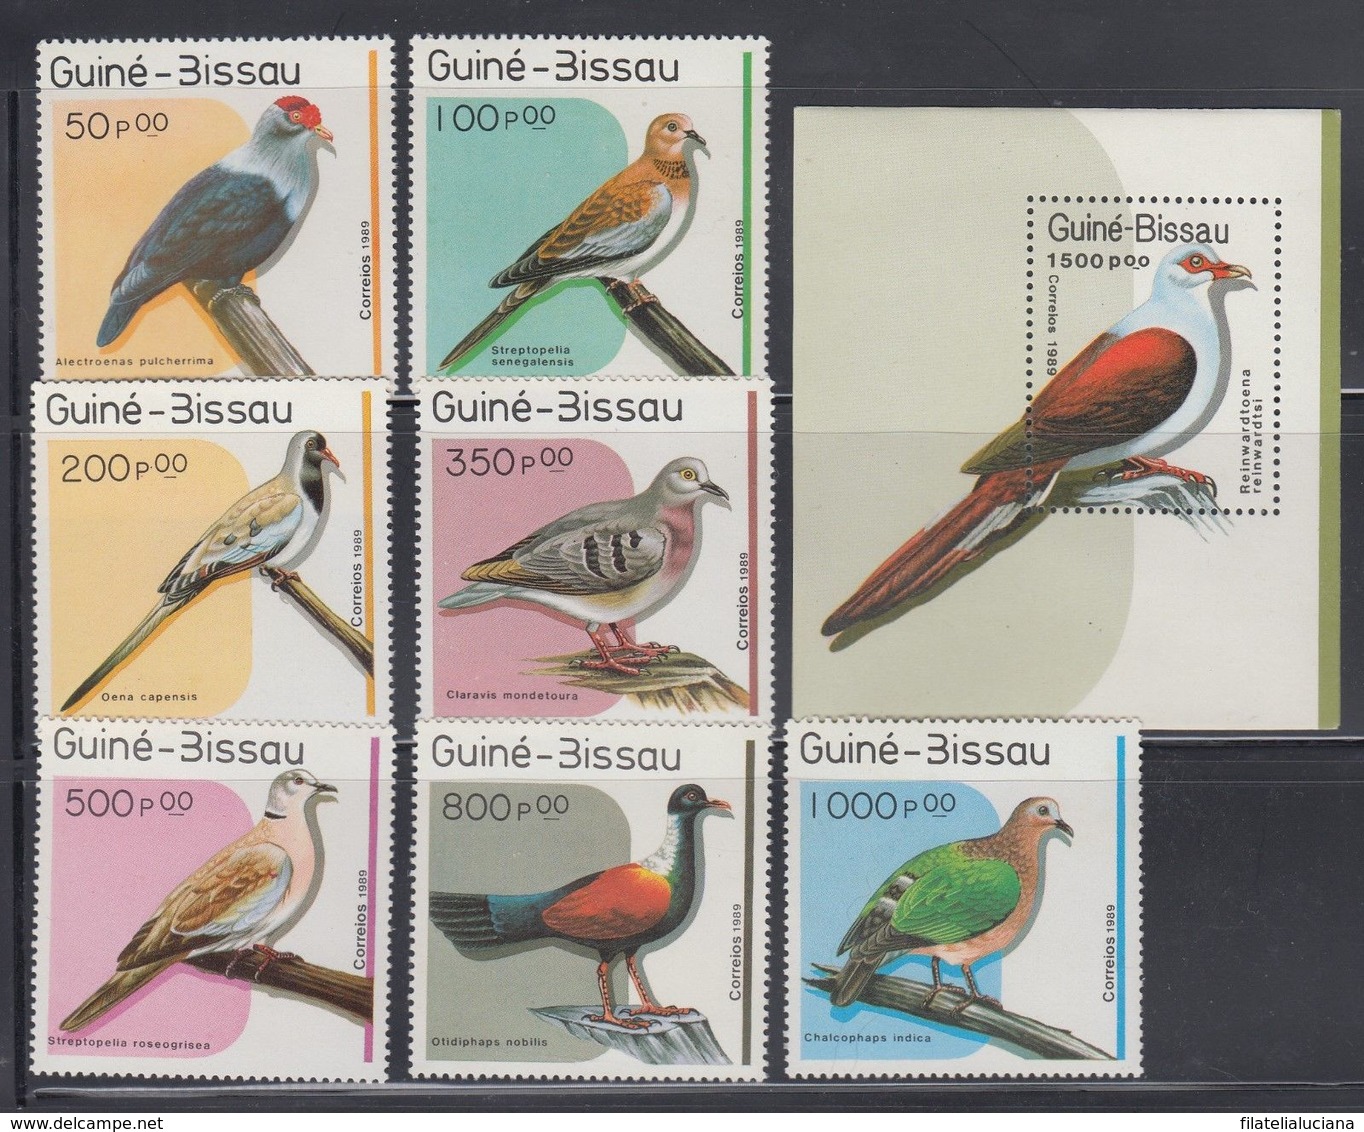 Guinea-Bissau Sc 811-18 MNH Birds - Columbiformes